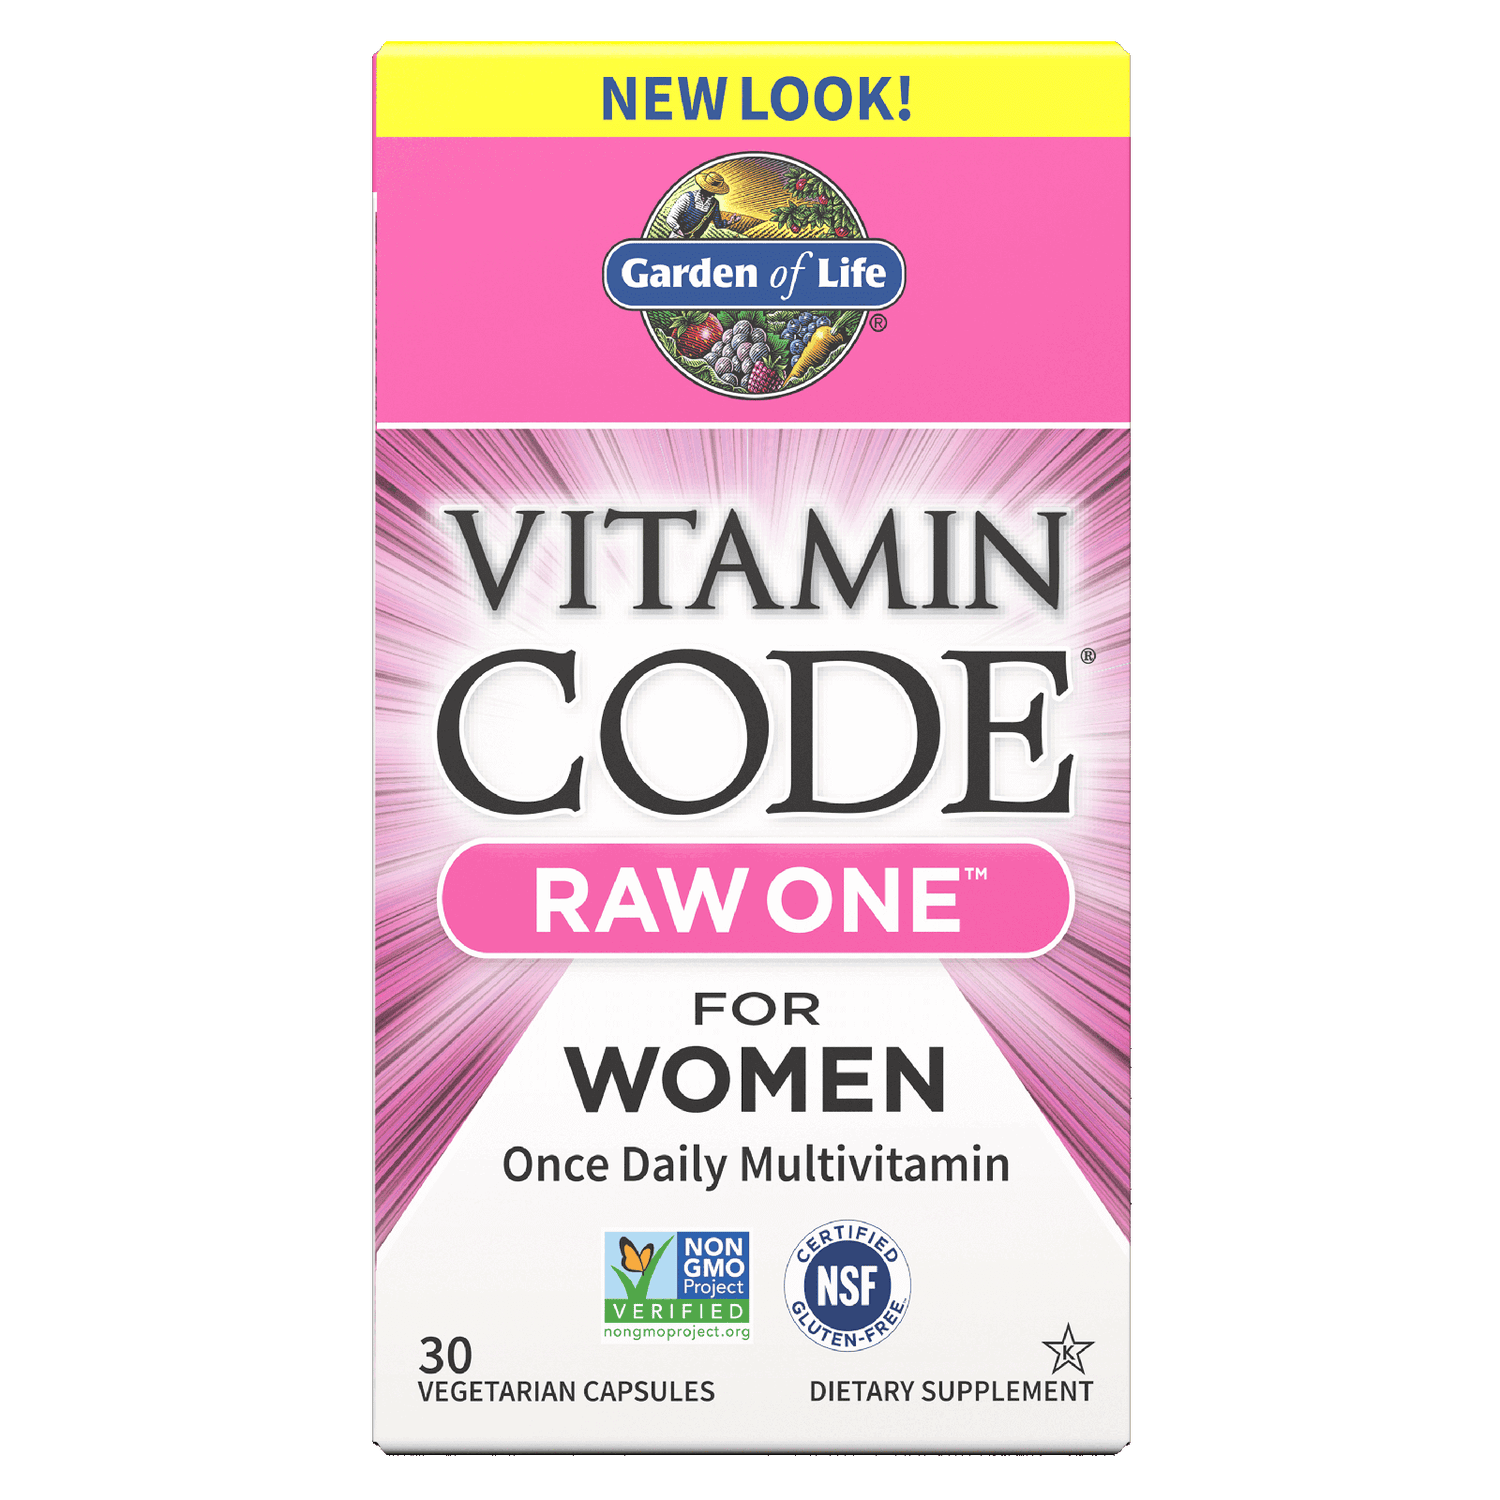 Vitamin Code Raw One For Women - 30 Capsules